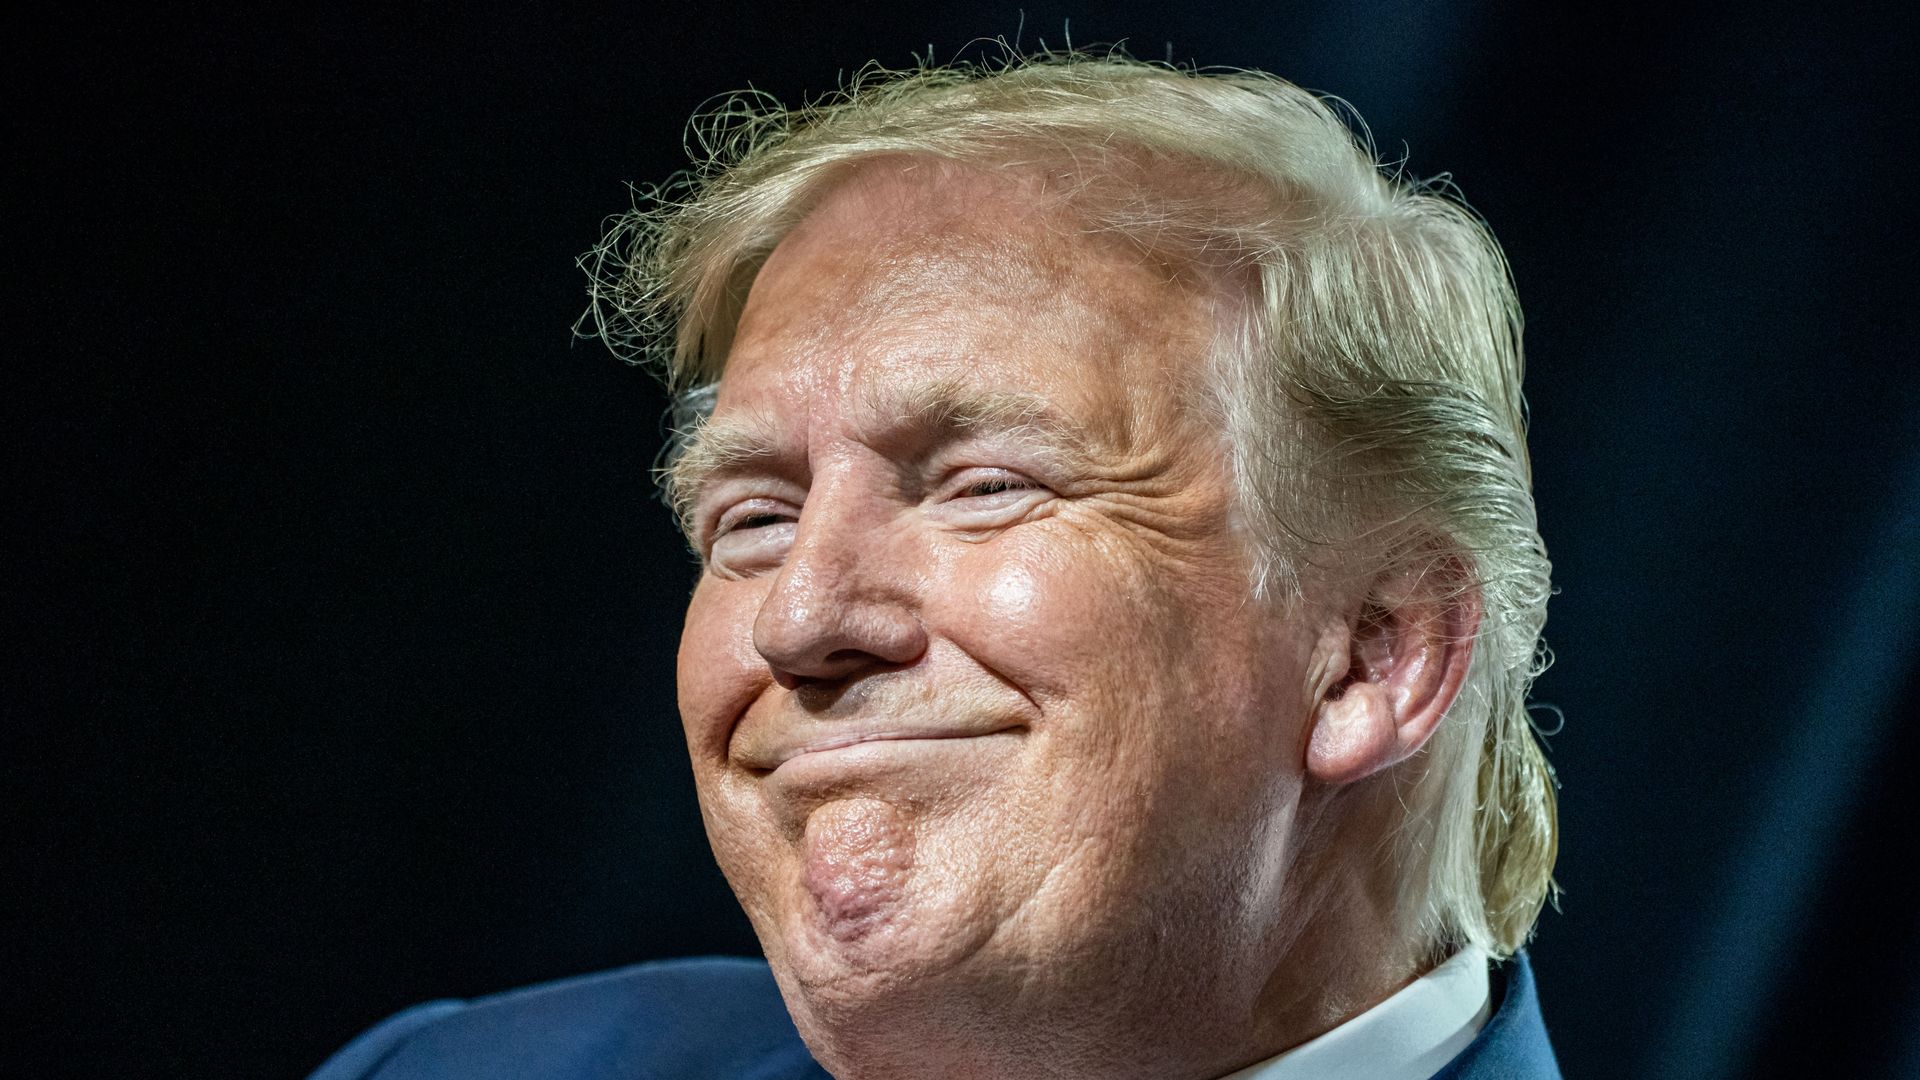 President Trump smiling